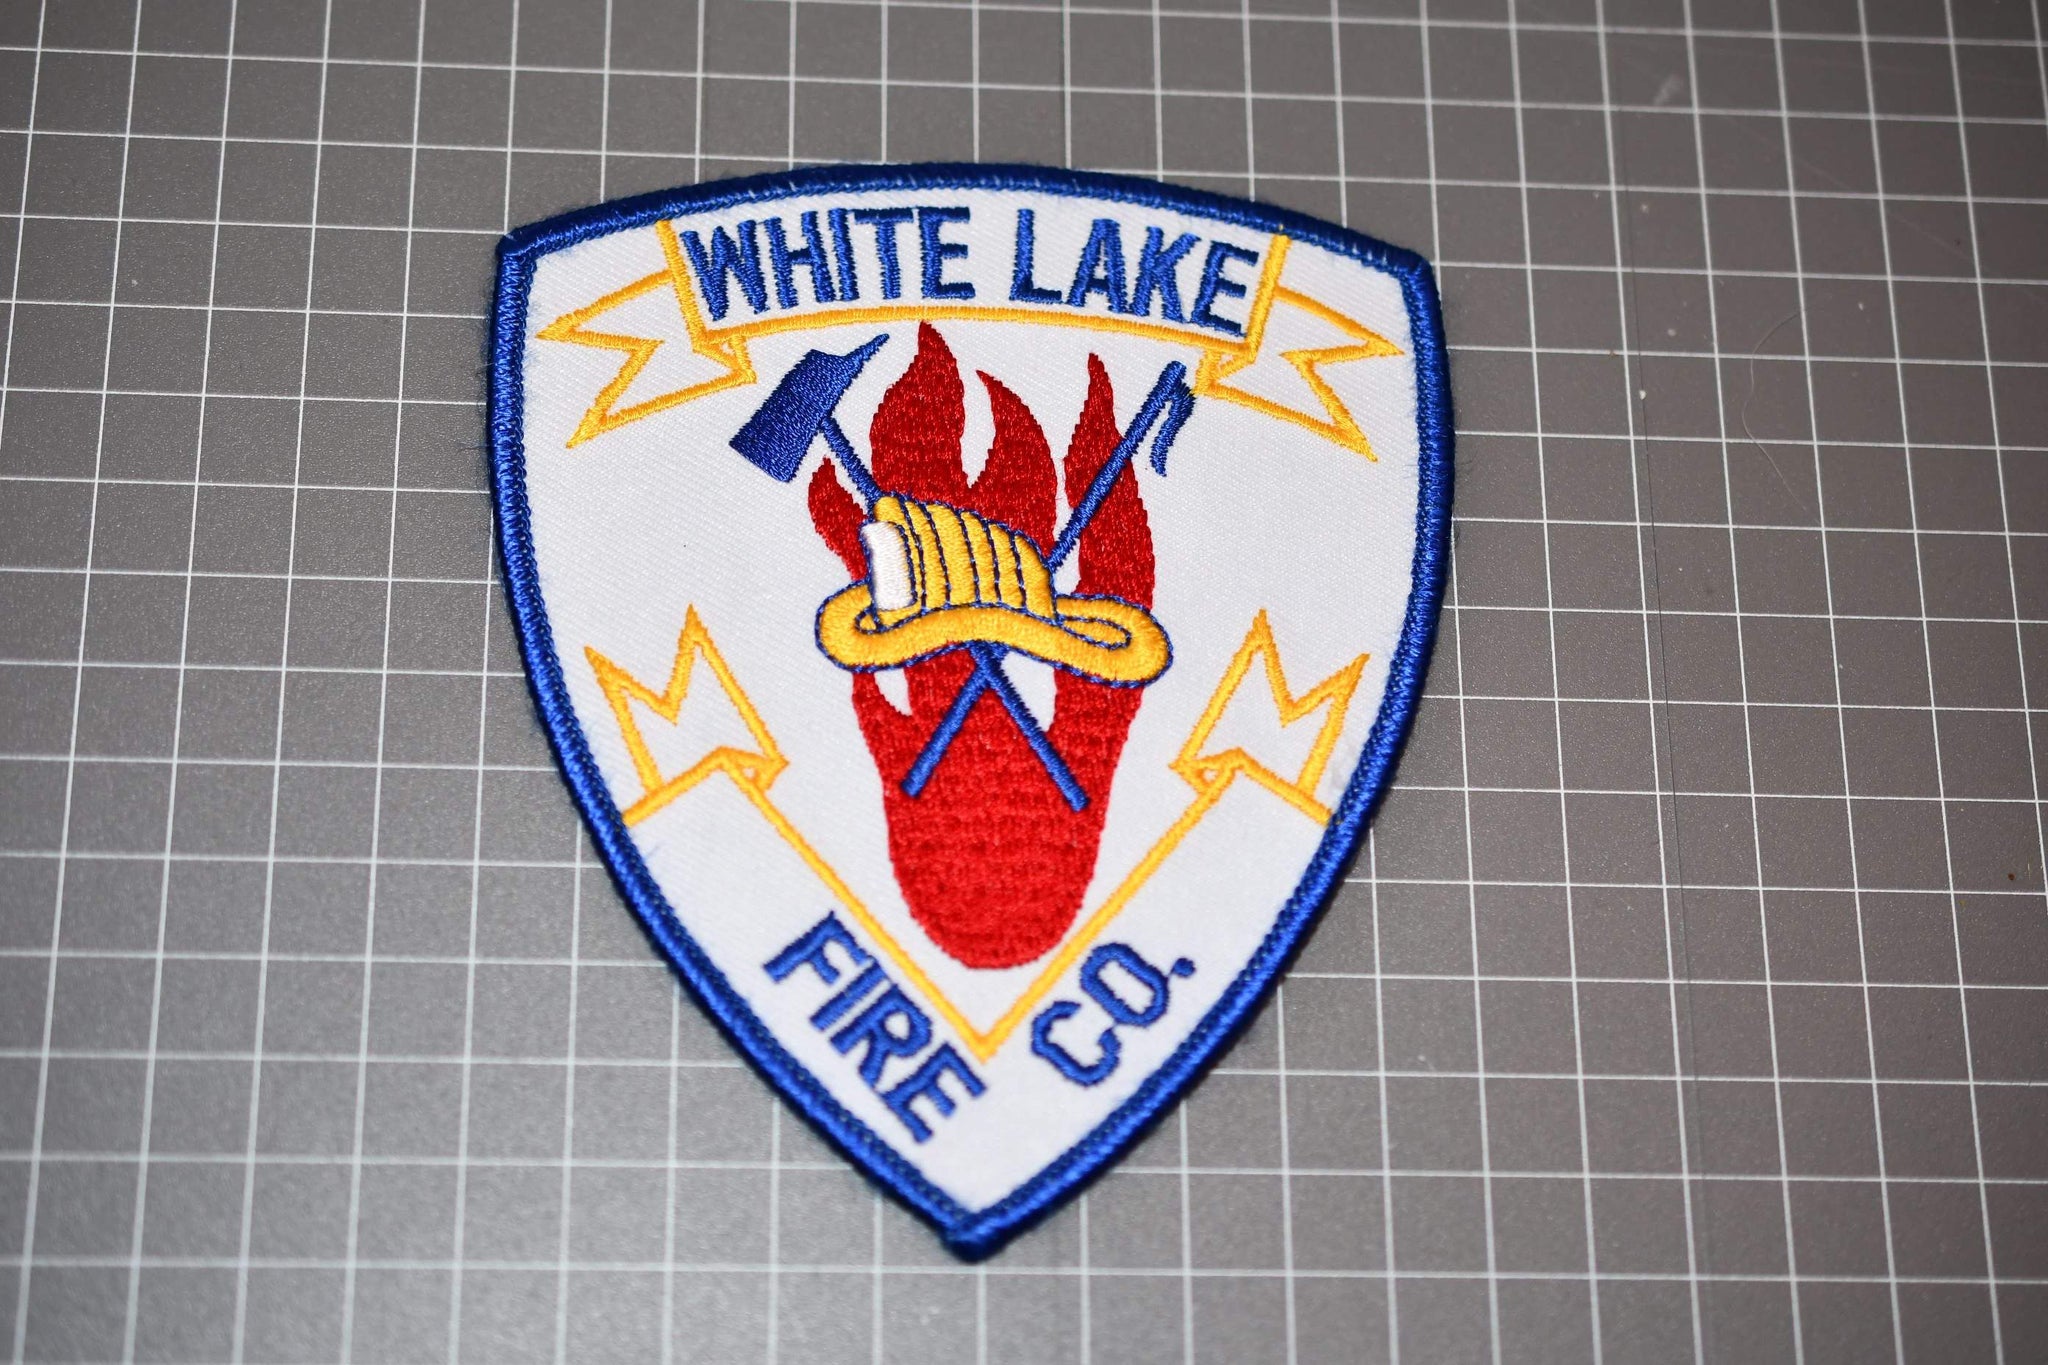 White lake Fire Company Patch (U.S. Fire Patches)